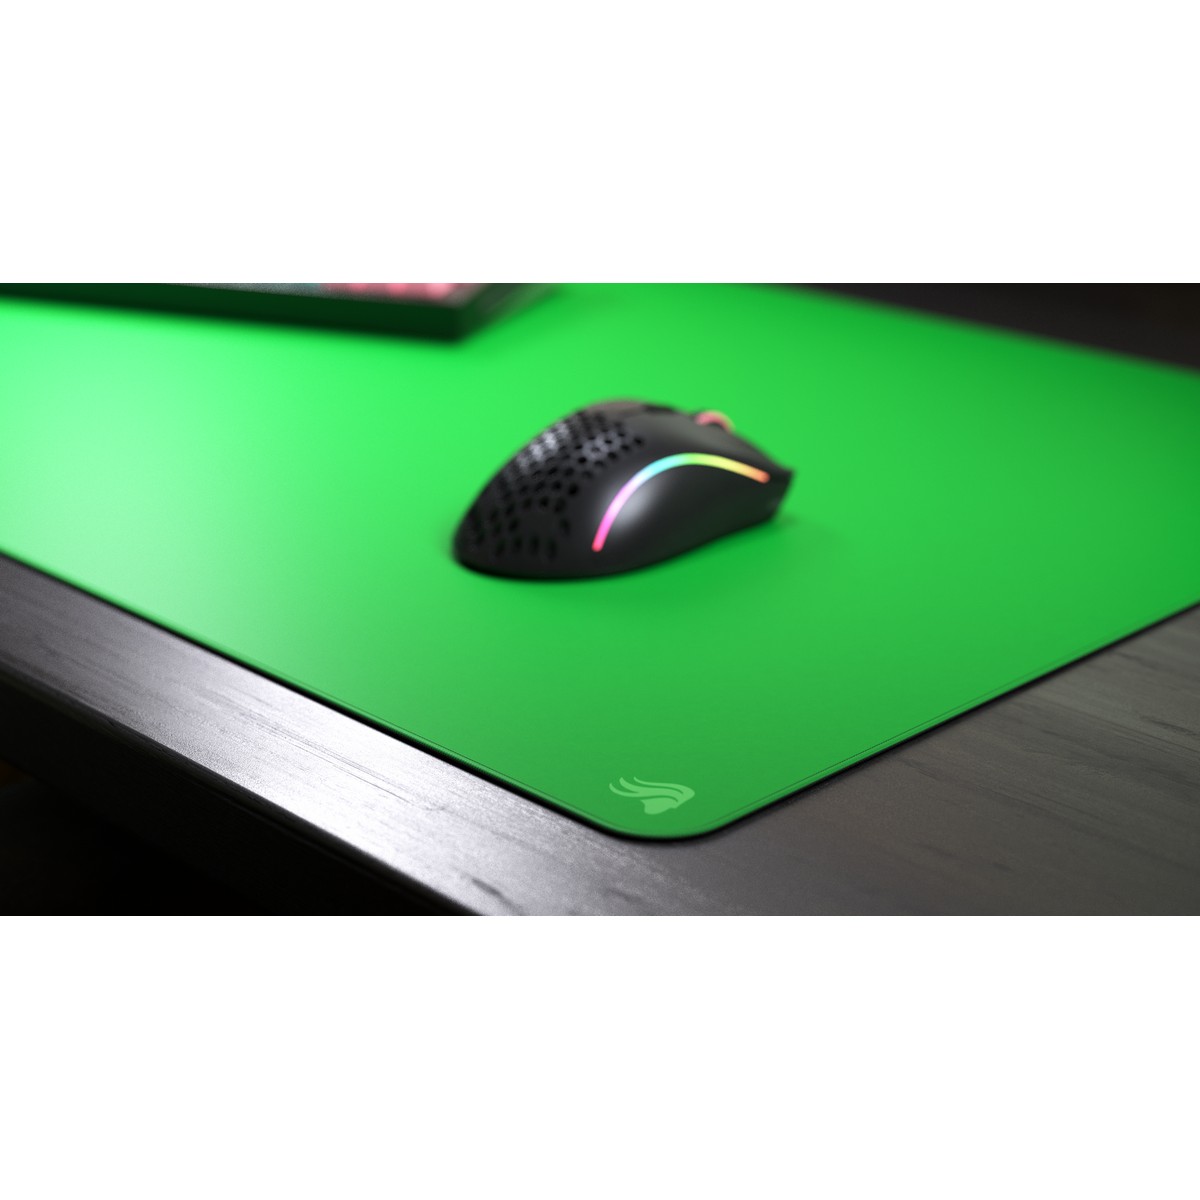 Glorious - Glorious Green Screen Mouse Pad - XXL Green 914x457x3mm (GLO-MP-GS)